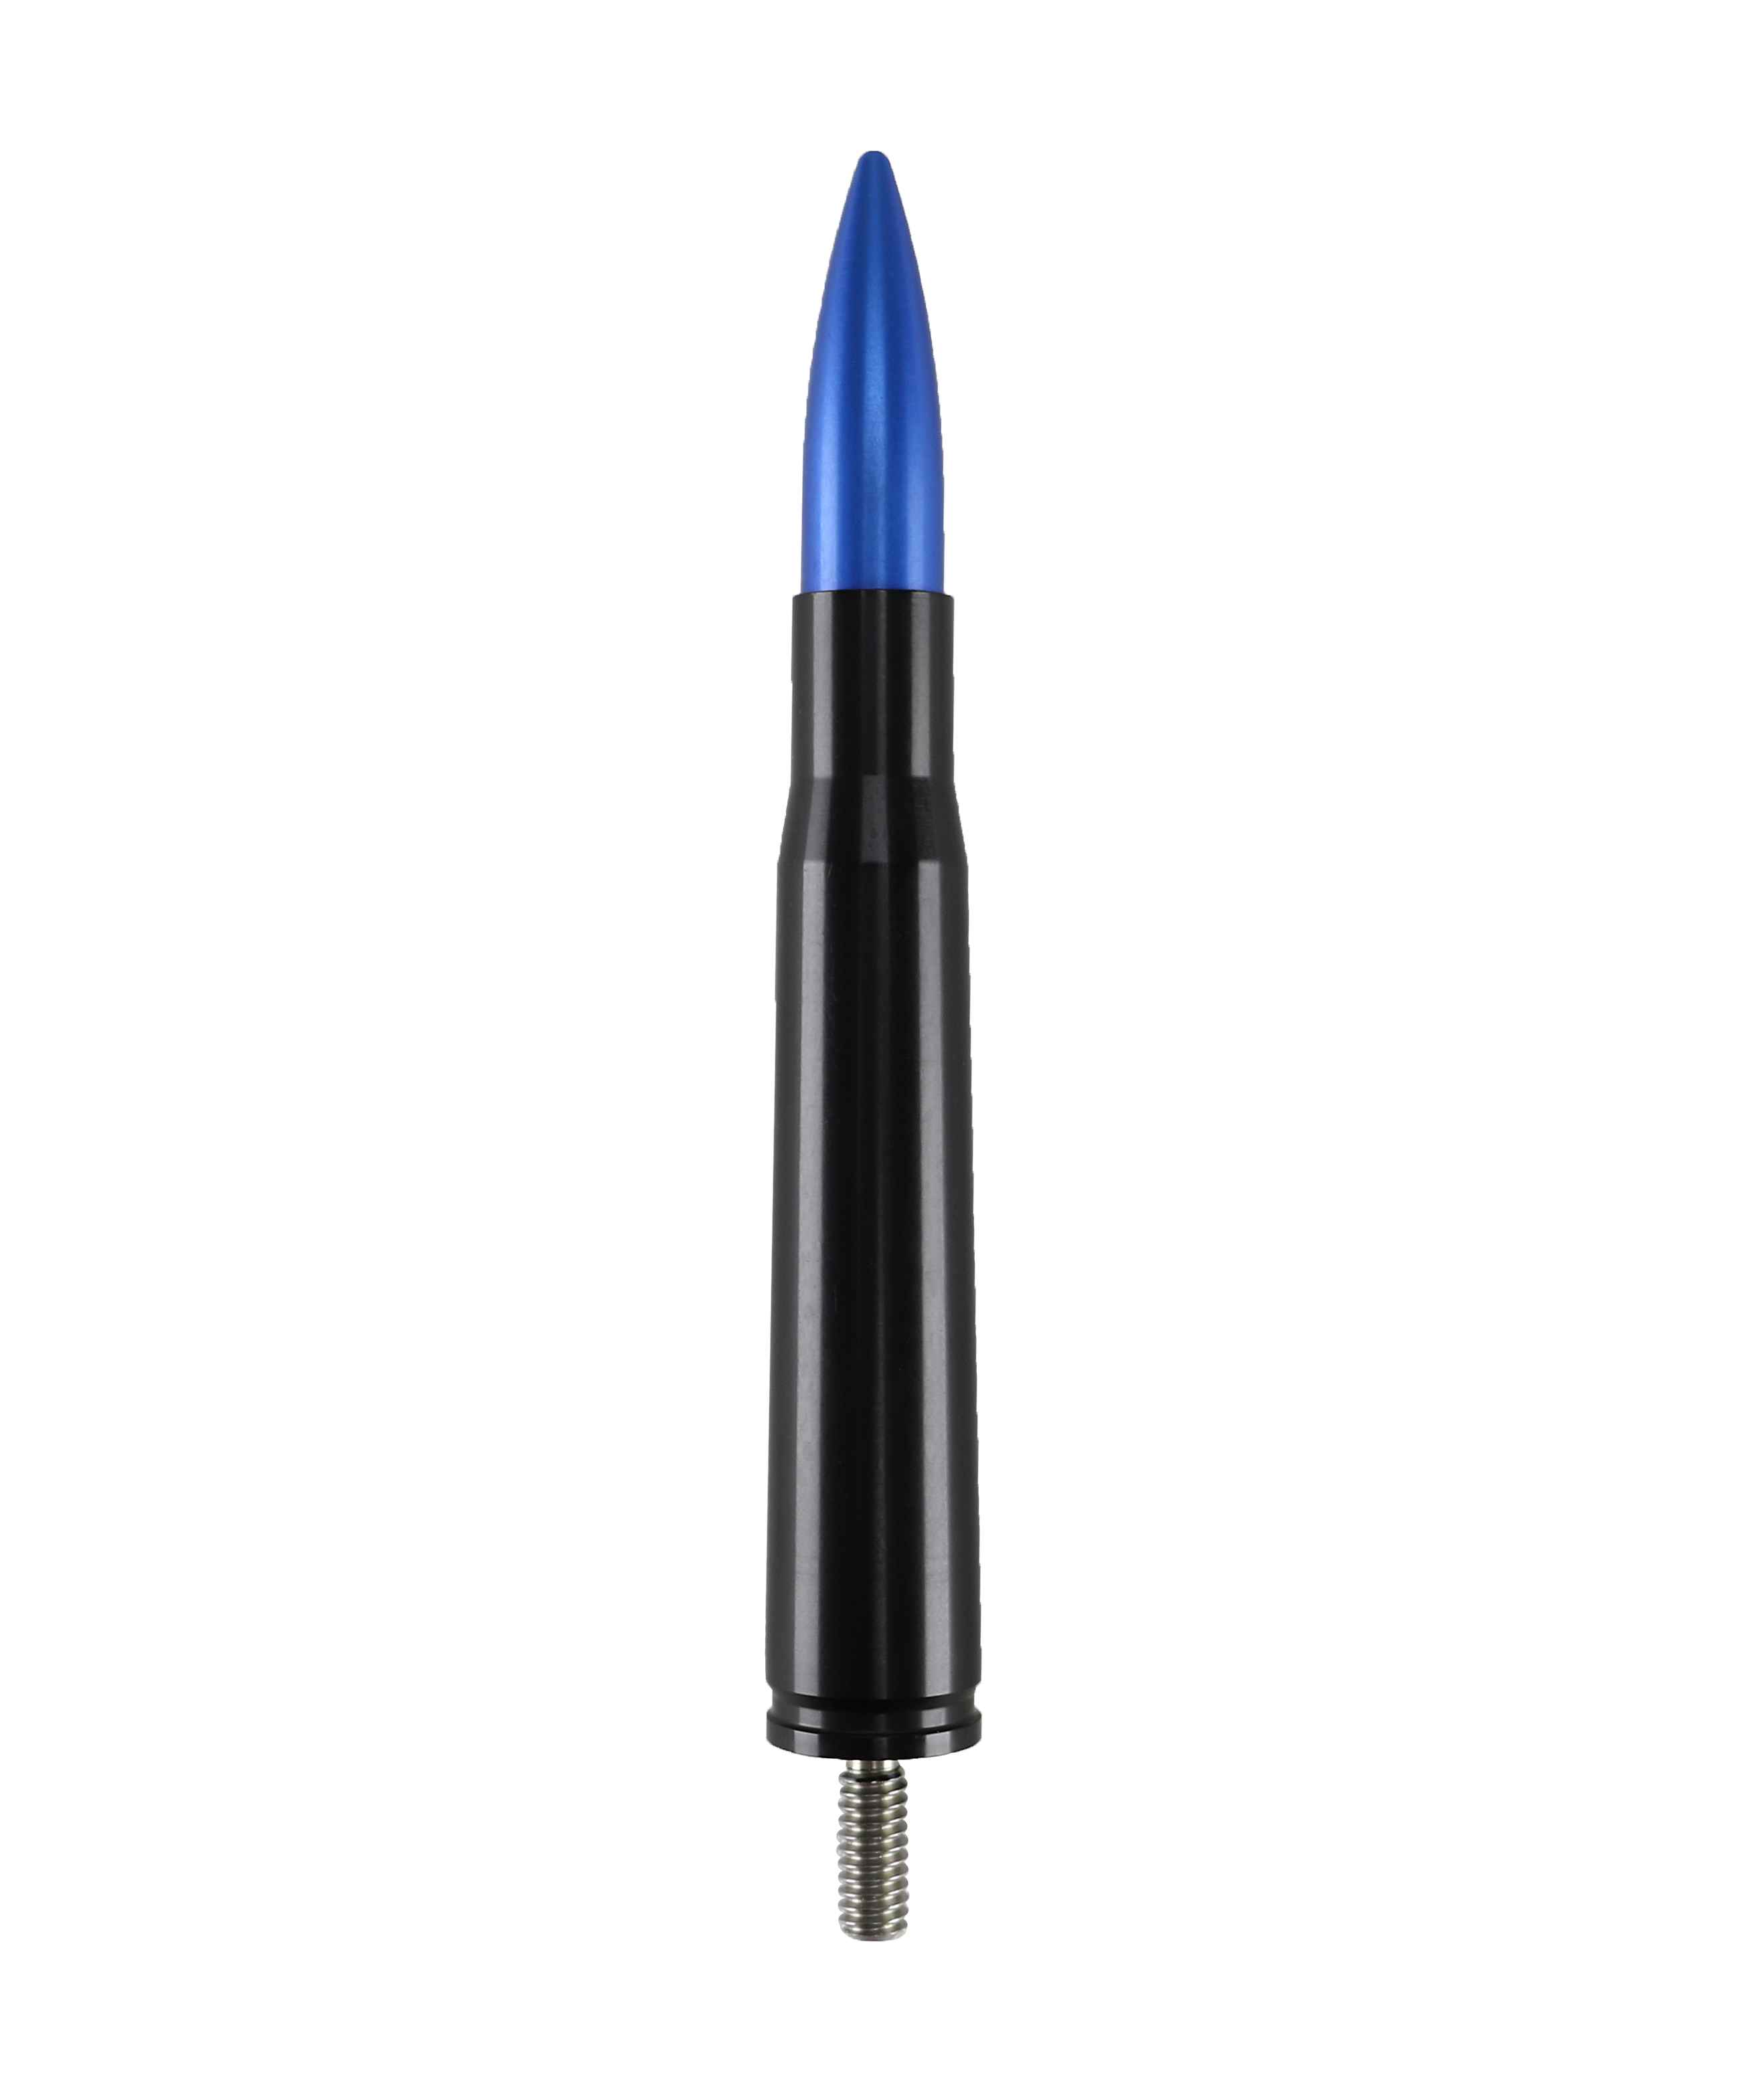 Votex - Made in USA - BLUE 50 Caliber Bullet Aluminum Antenna - Part Number A435-BLUE-HHU